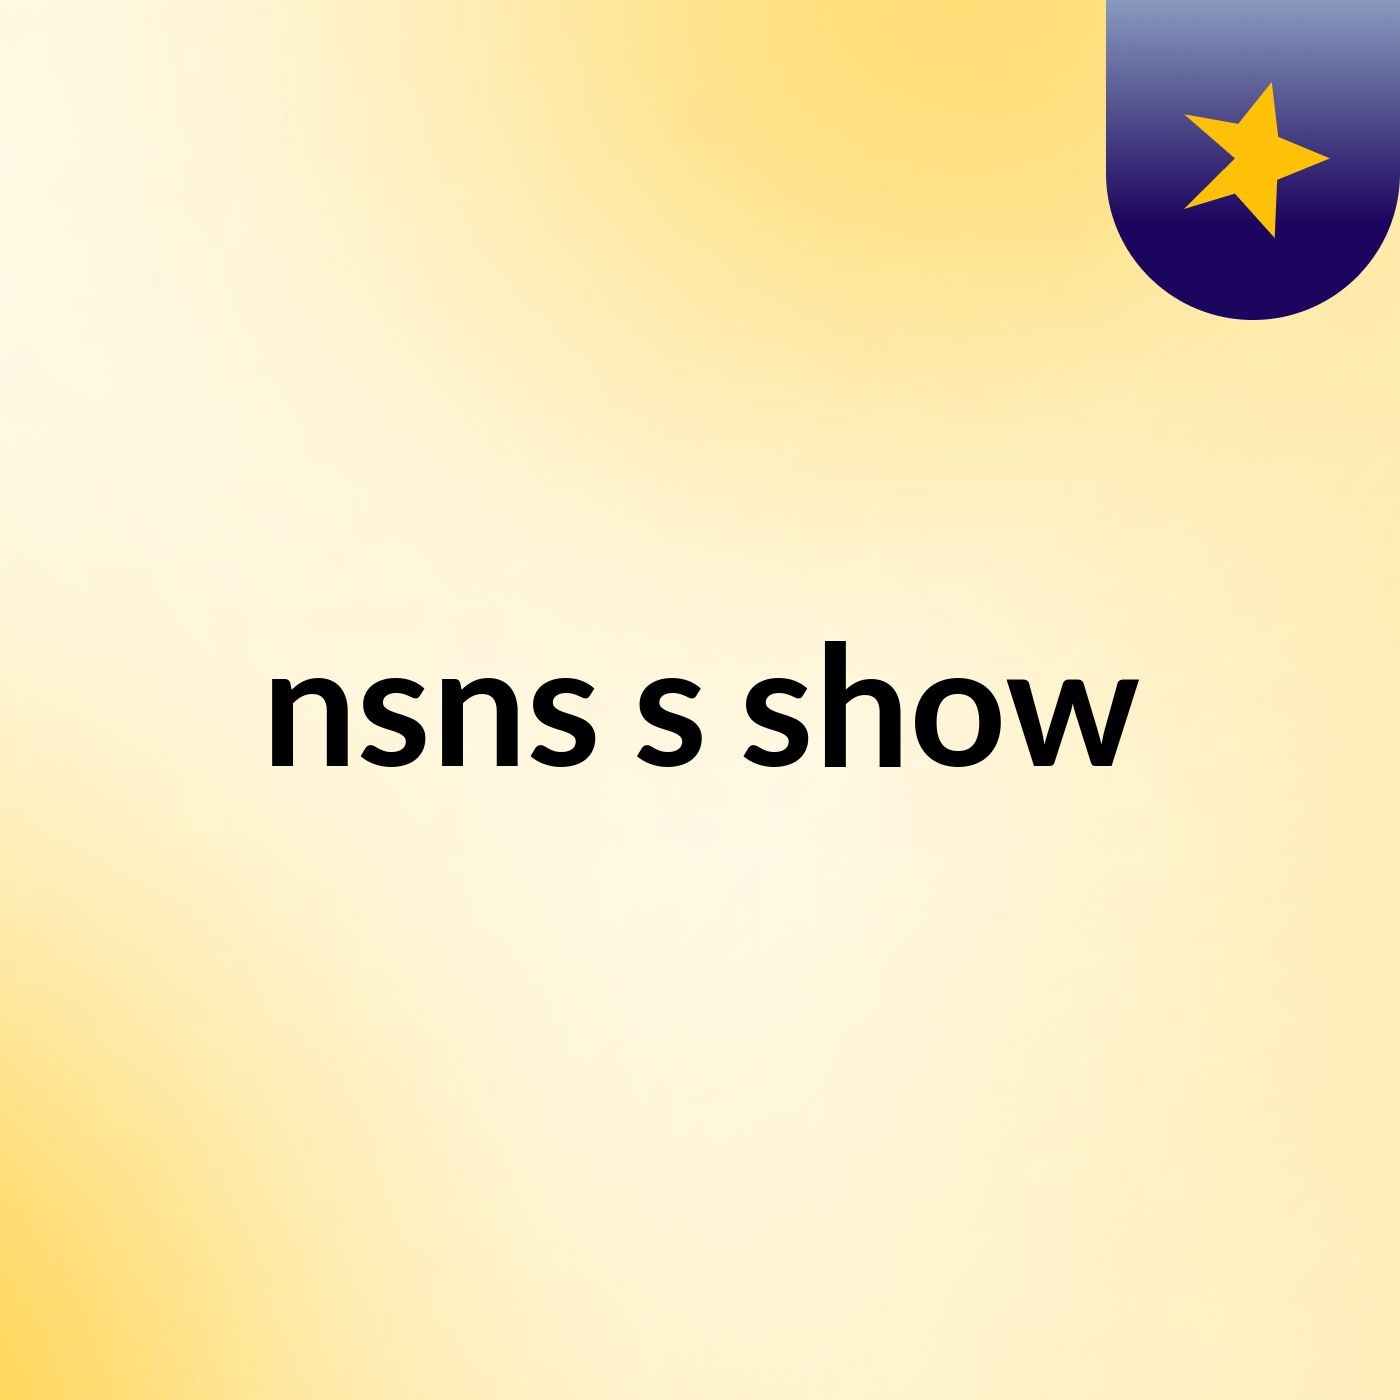 nsns's show